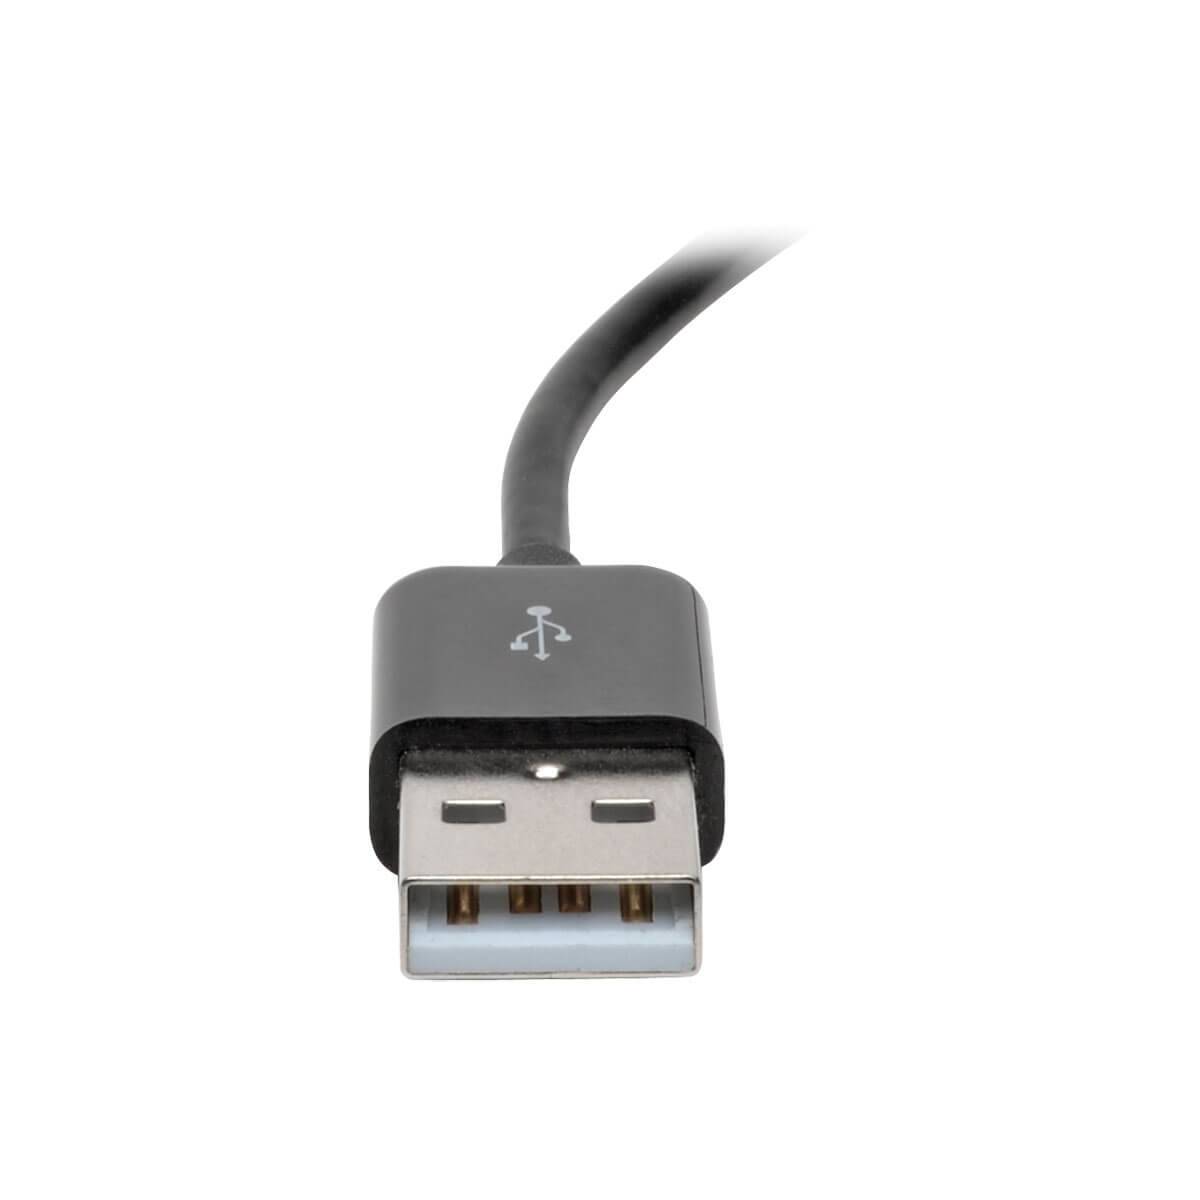 Rca Informatique - image du produit : USB 2.0 TO VGA DUAL MONITOR